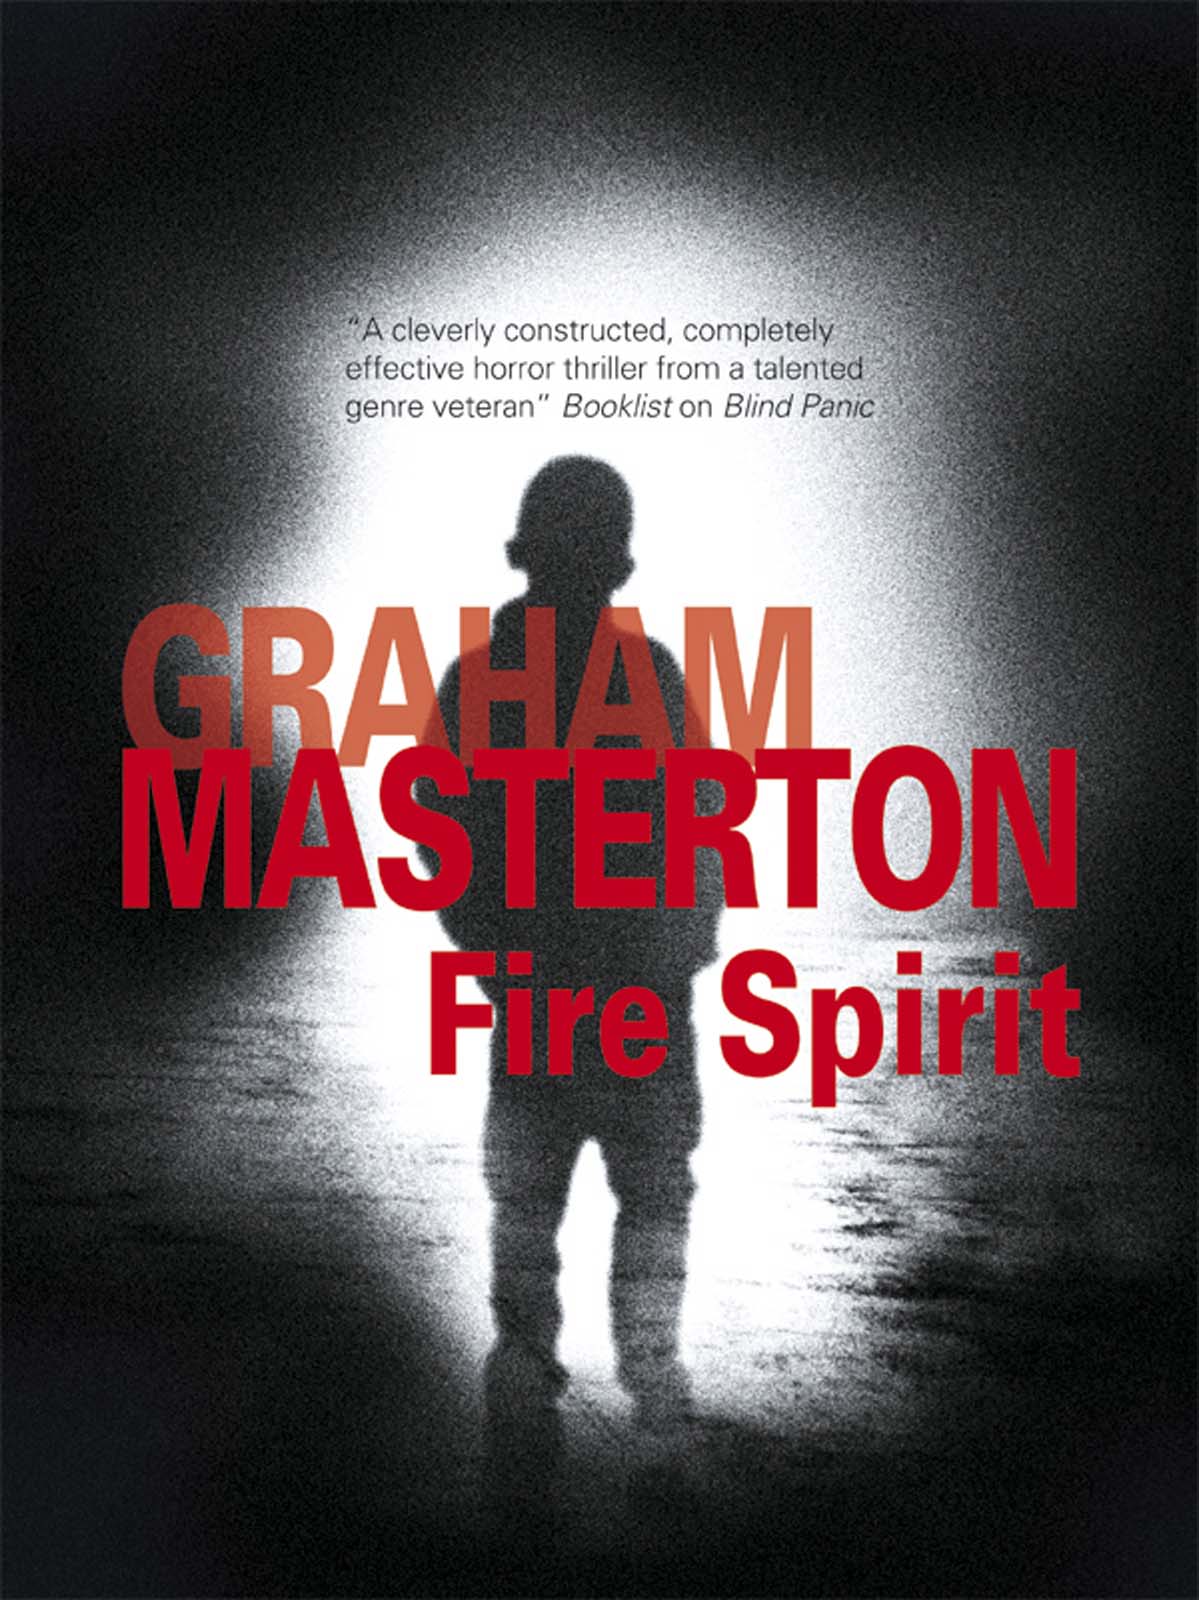 Fire Spirit by Graham Masterton